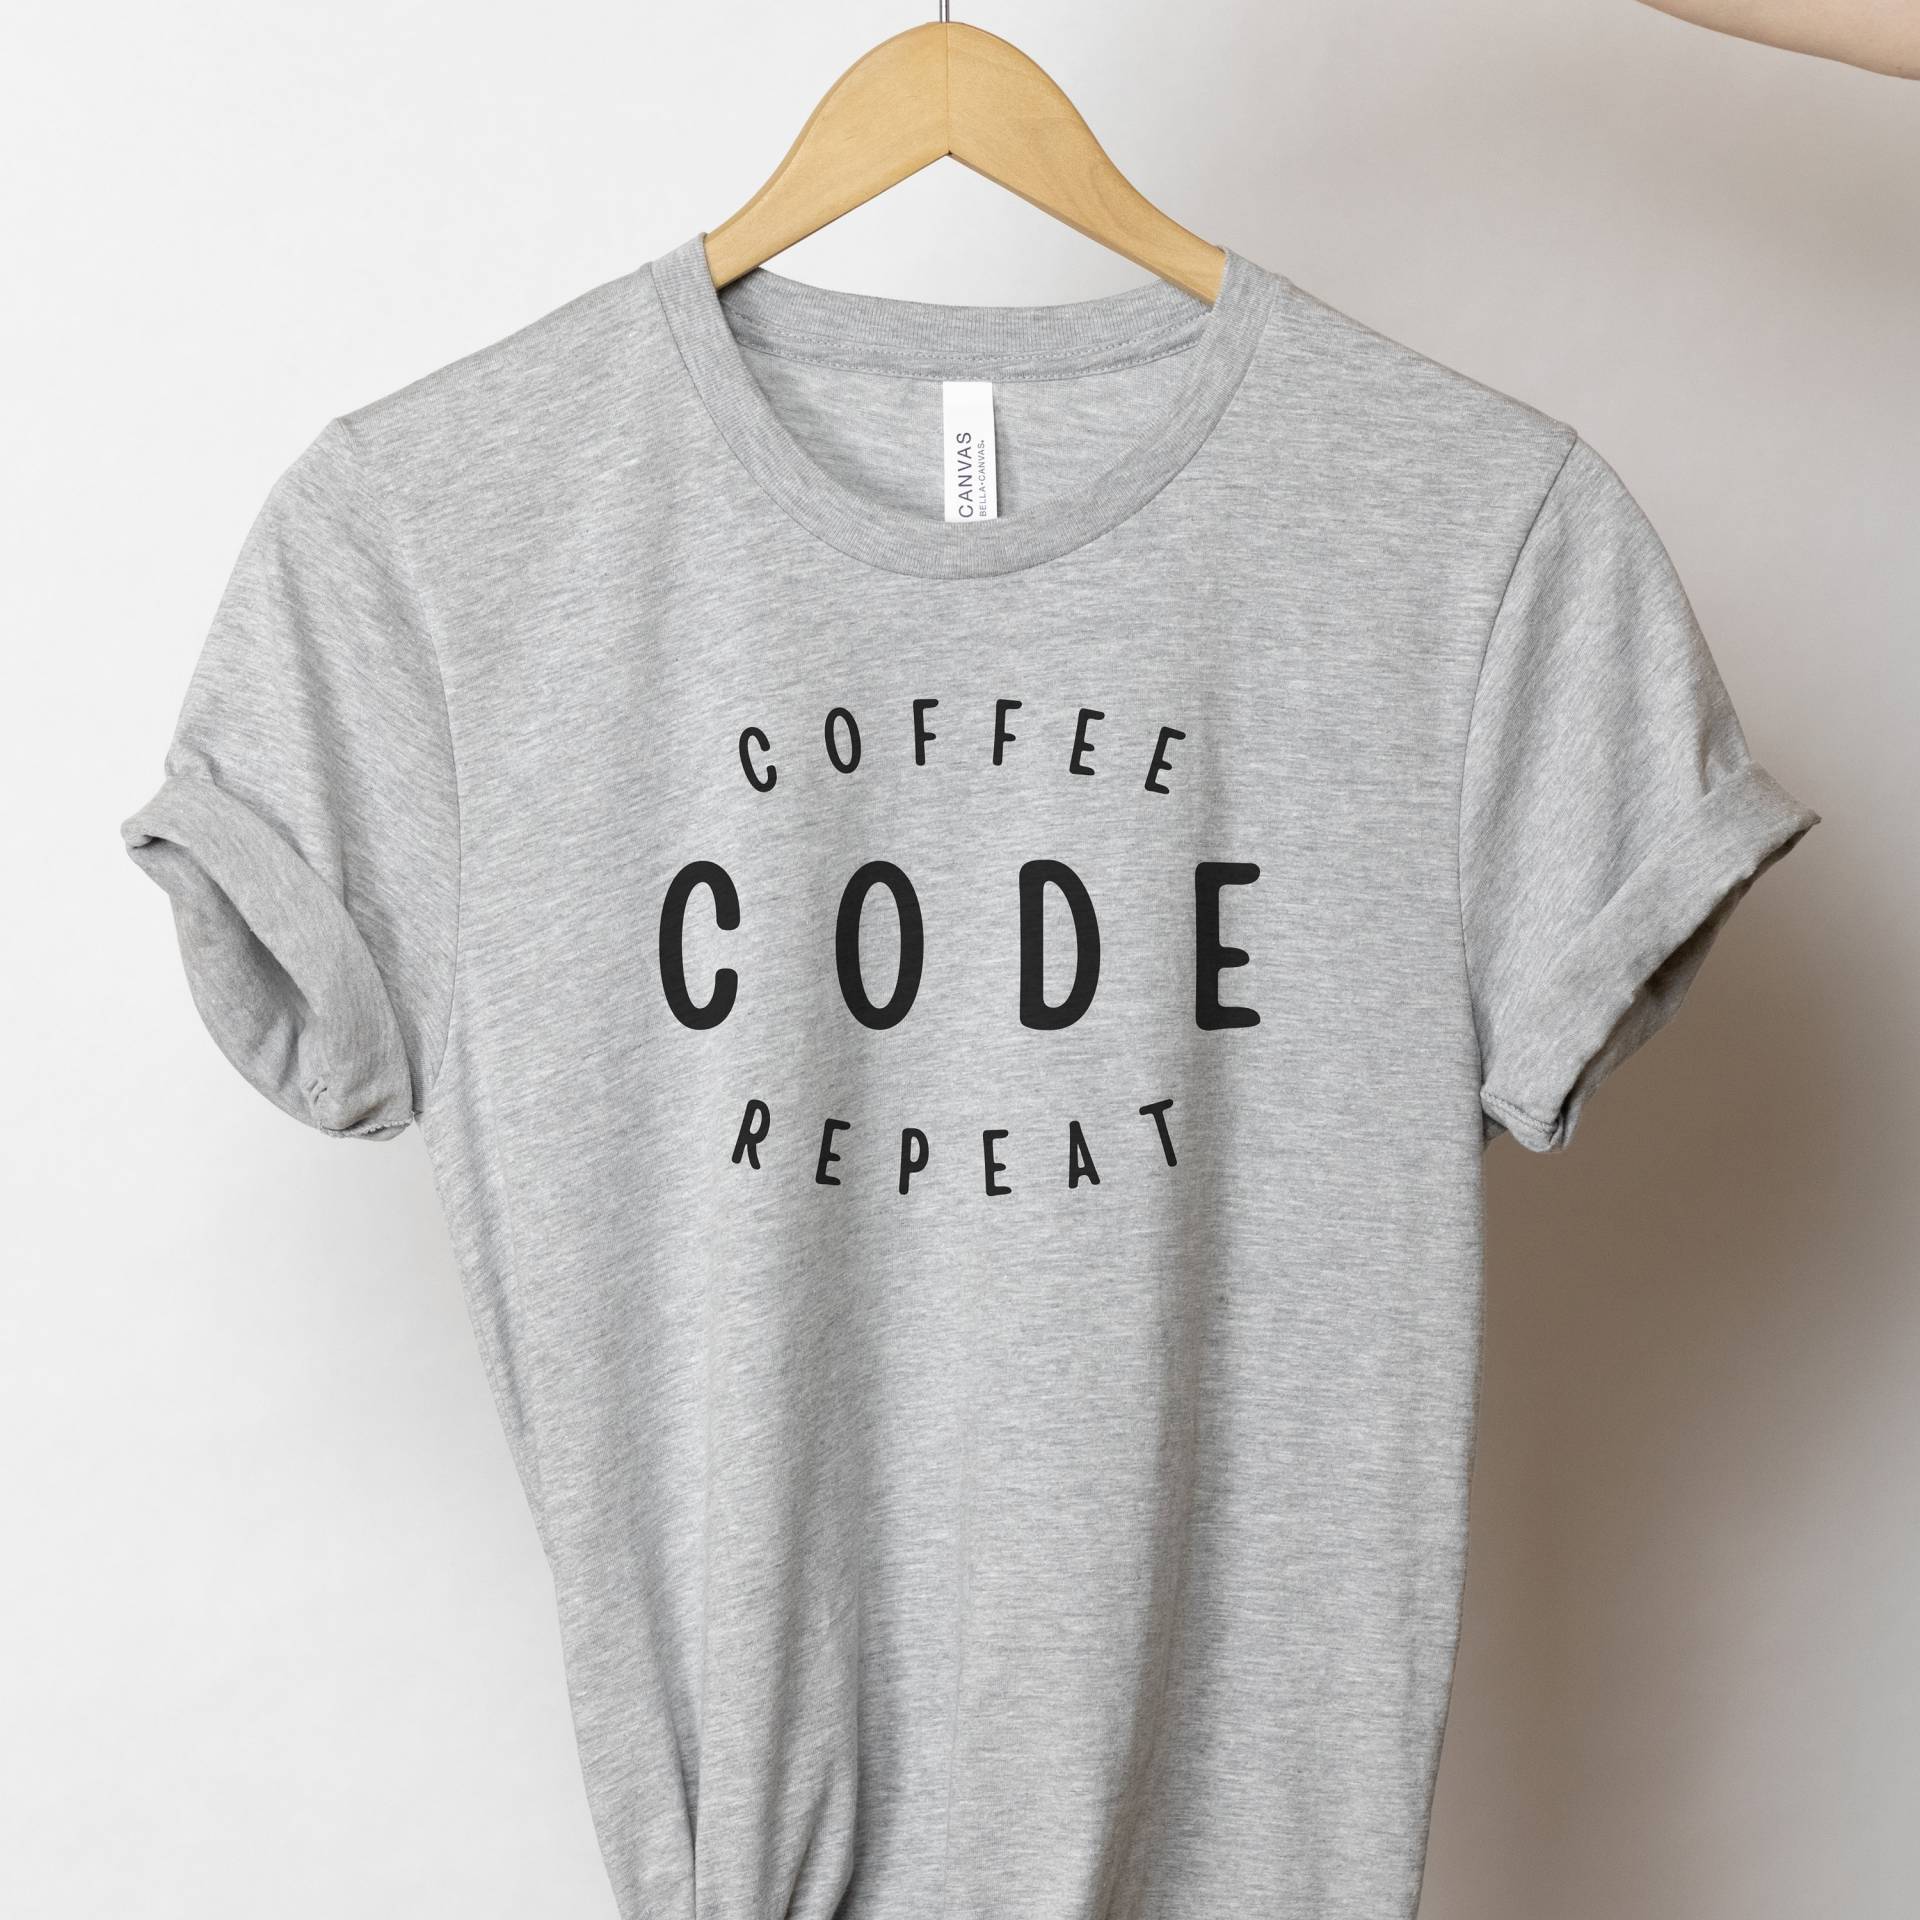 Programmierer Shirt, Langarm, Sweatshirt, Kapuzenpullover, Tank Top, Maske, Geschenk, Kaffeecode Wiederholen, Programmieren, Lustiges von SleepingCutiesShop